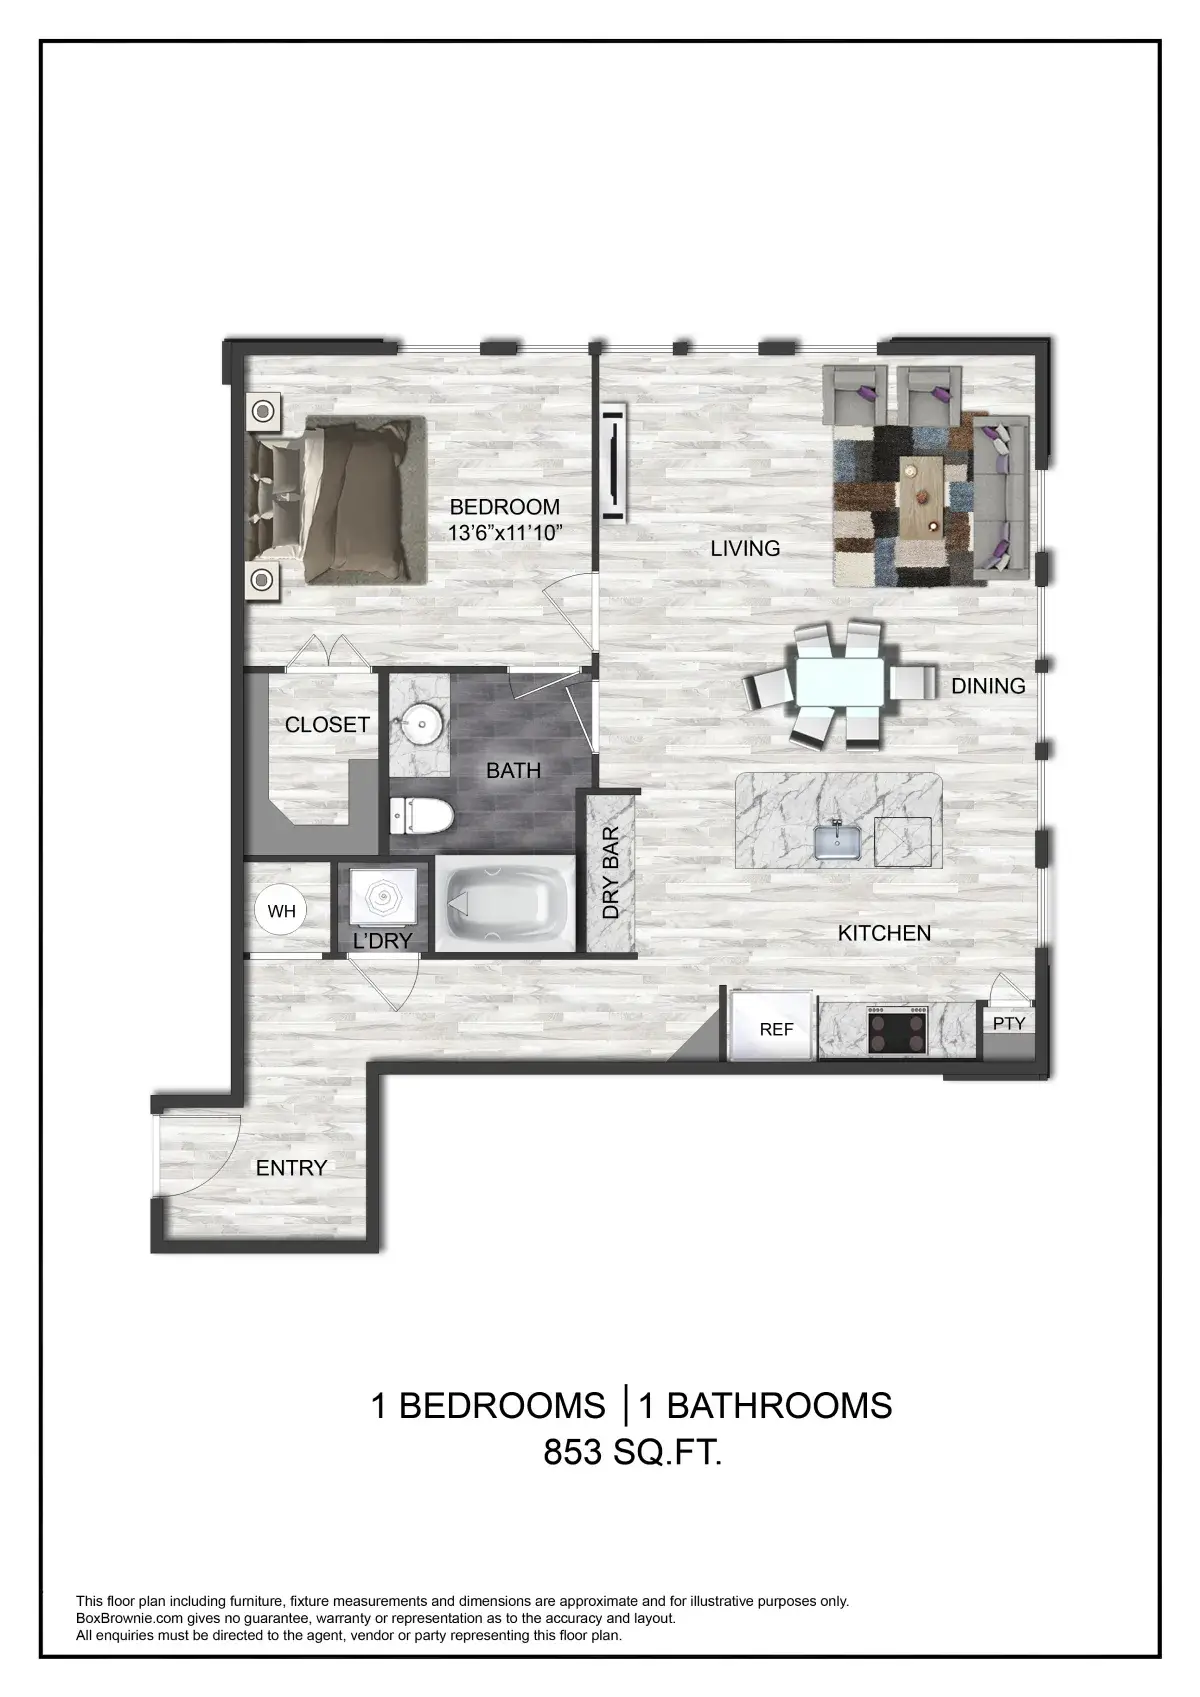 Sinclair houston apartment floorplan 5